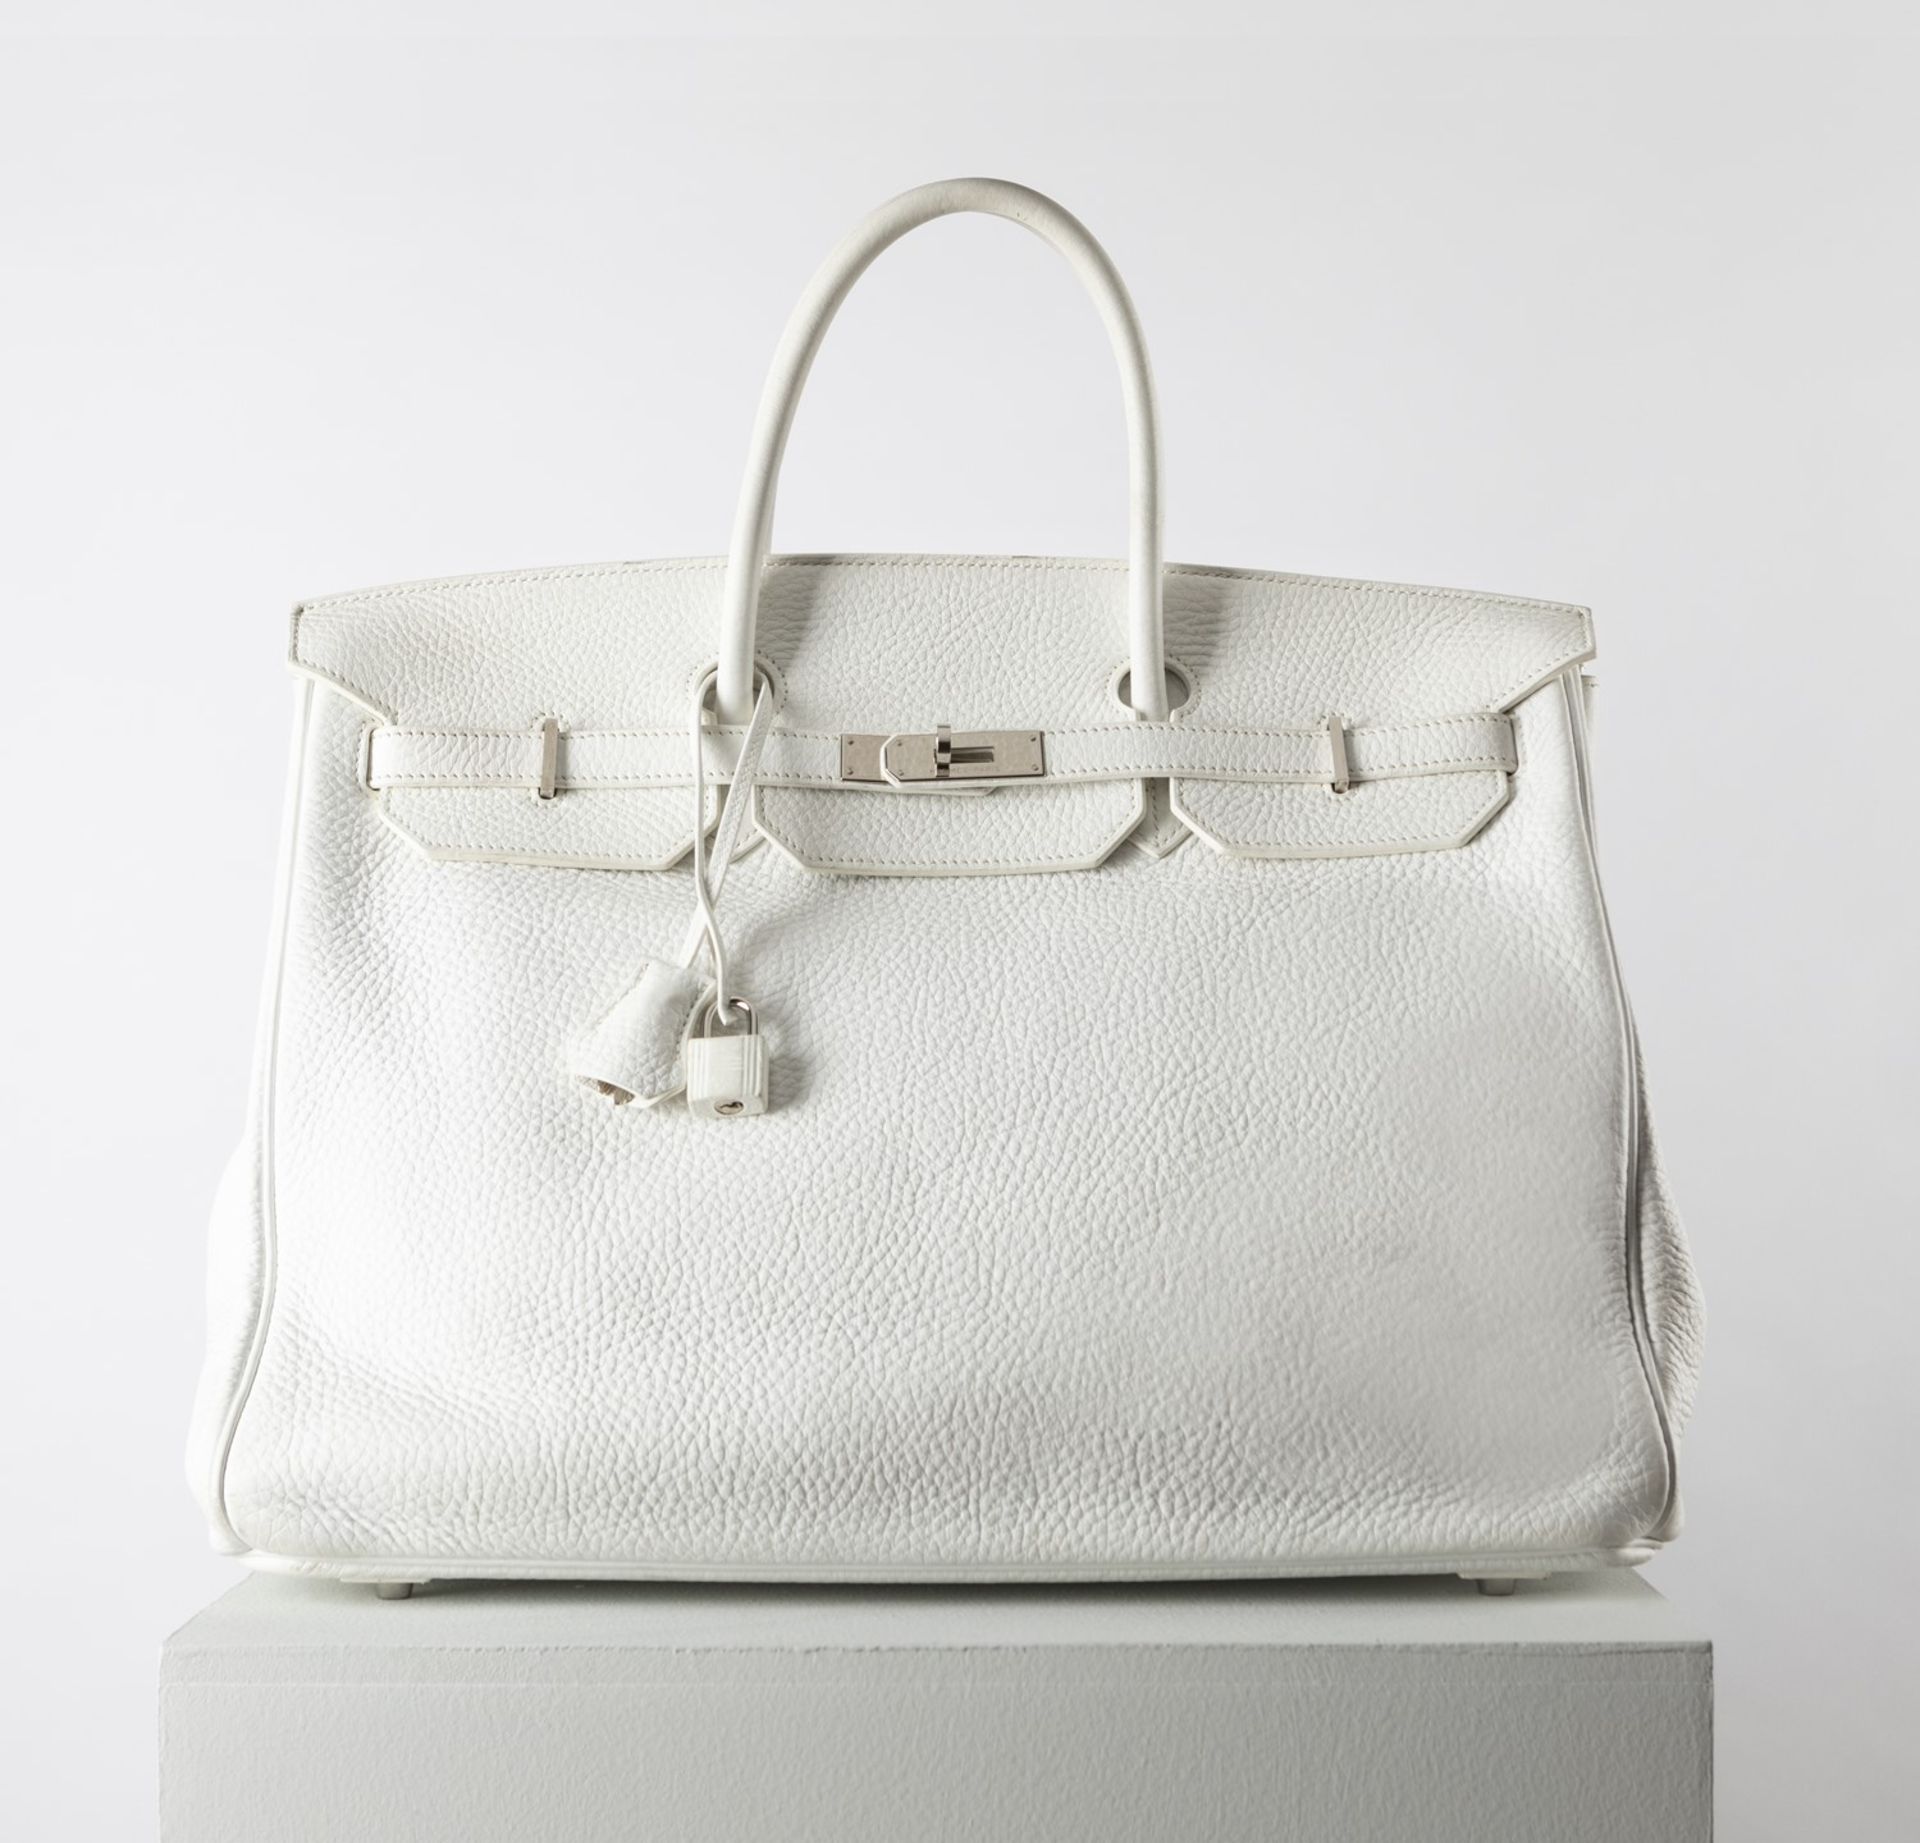 Hermès - Birkin bag 40 cm - Birkin bag 40 cm - White togo leather 40 cm Birkin bag, [...]